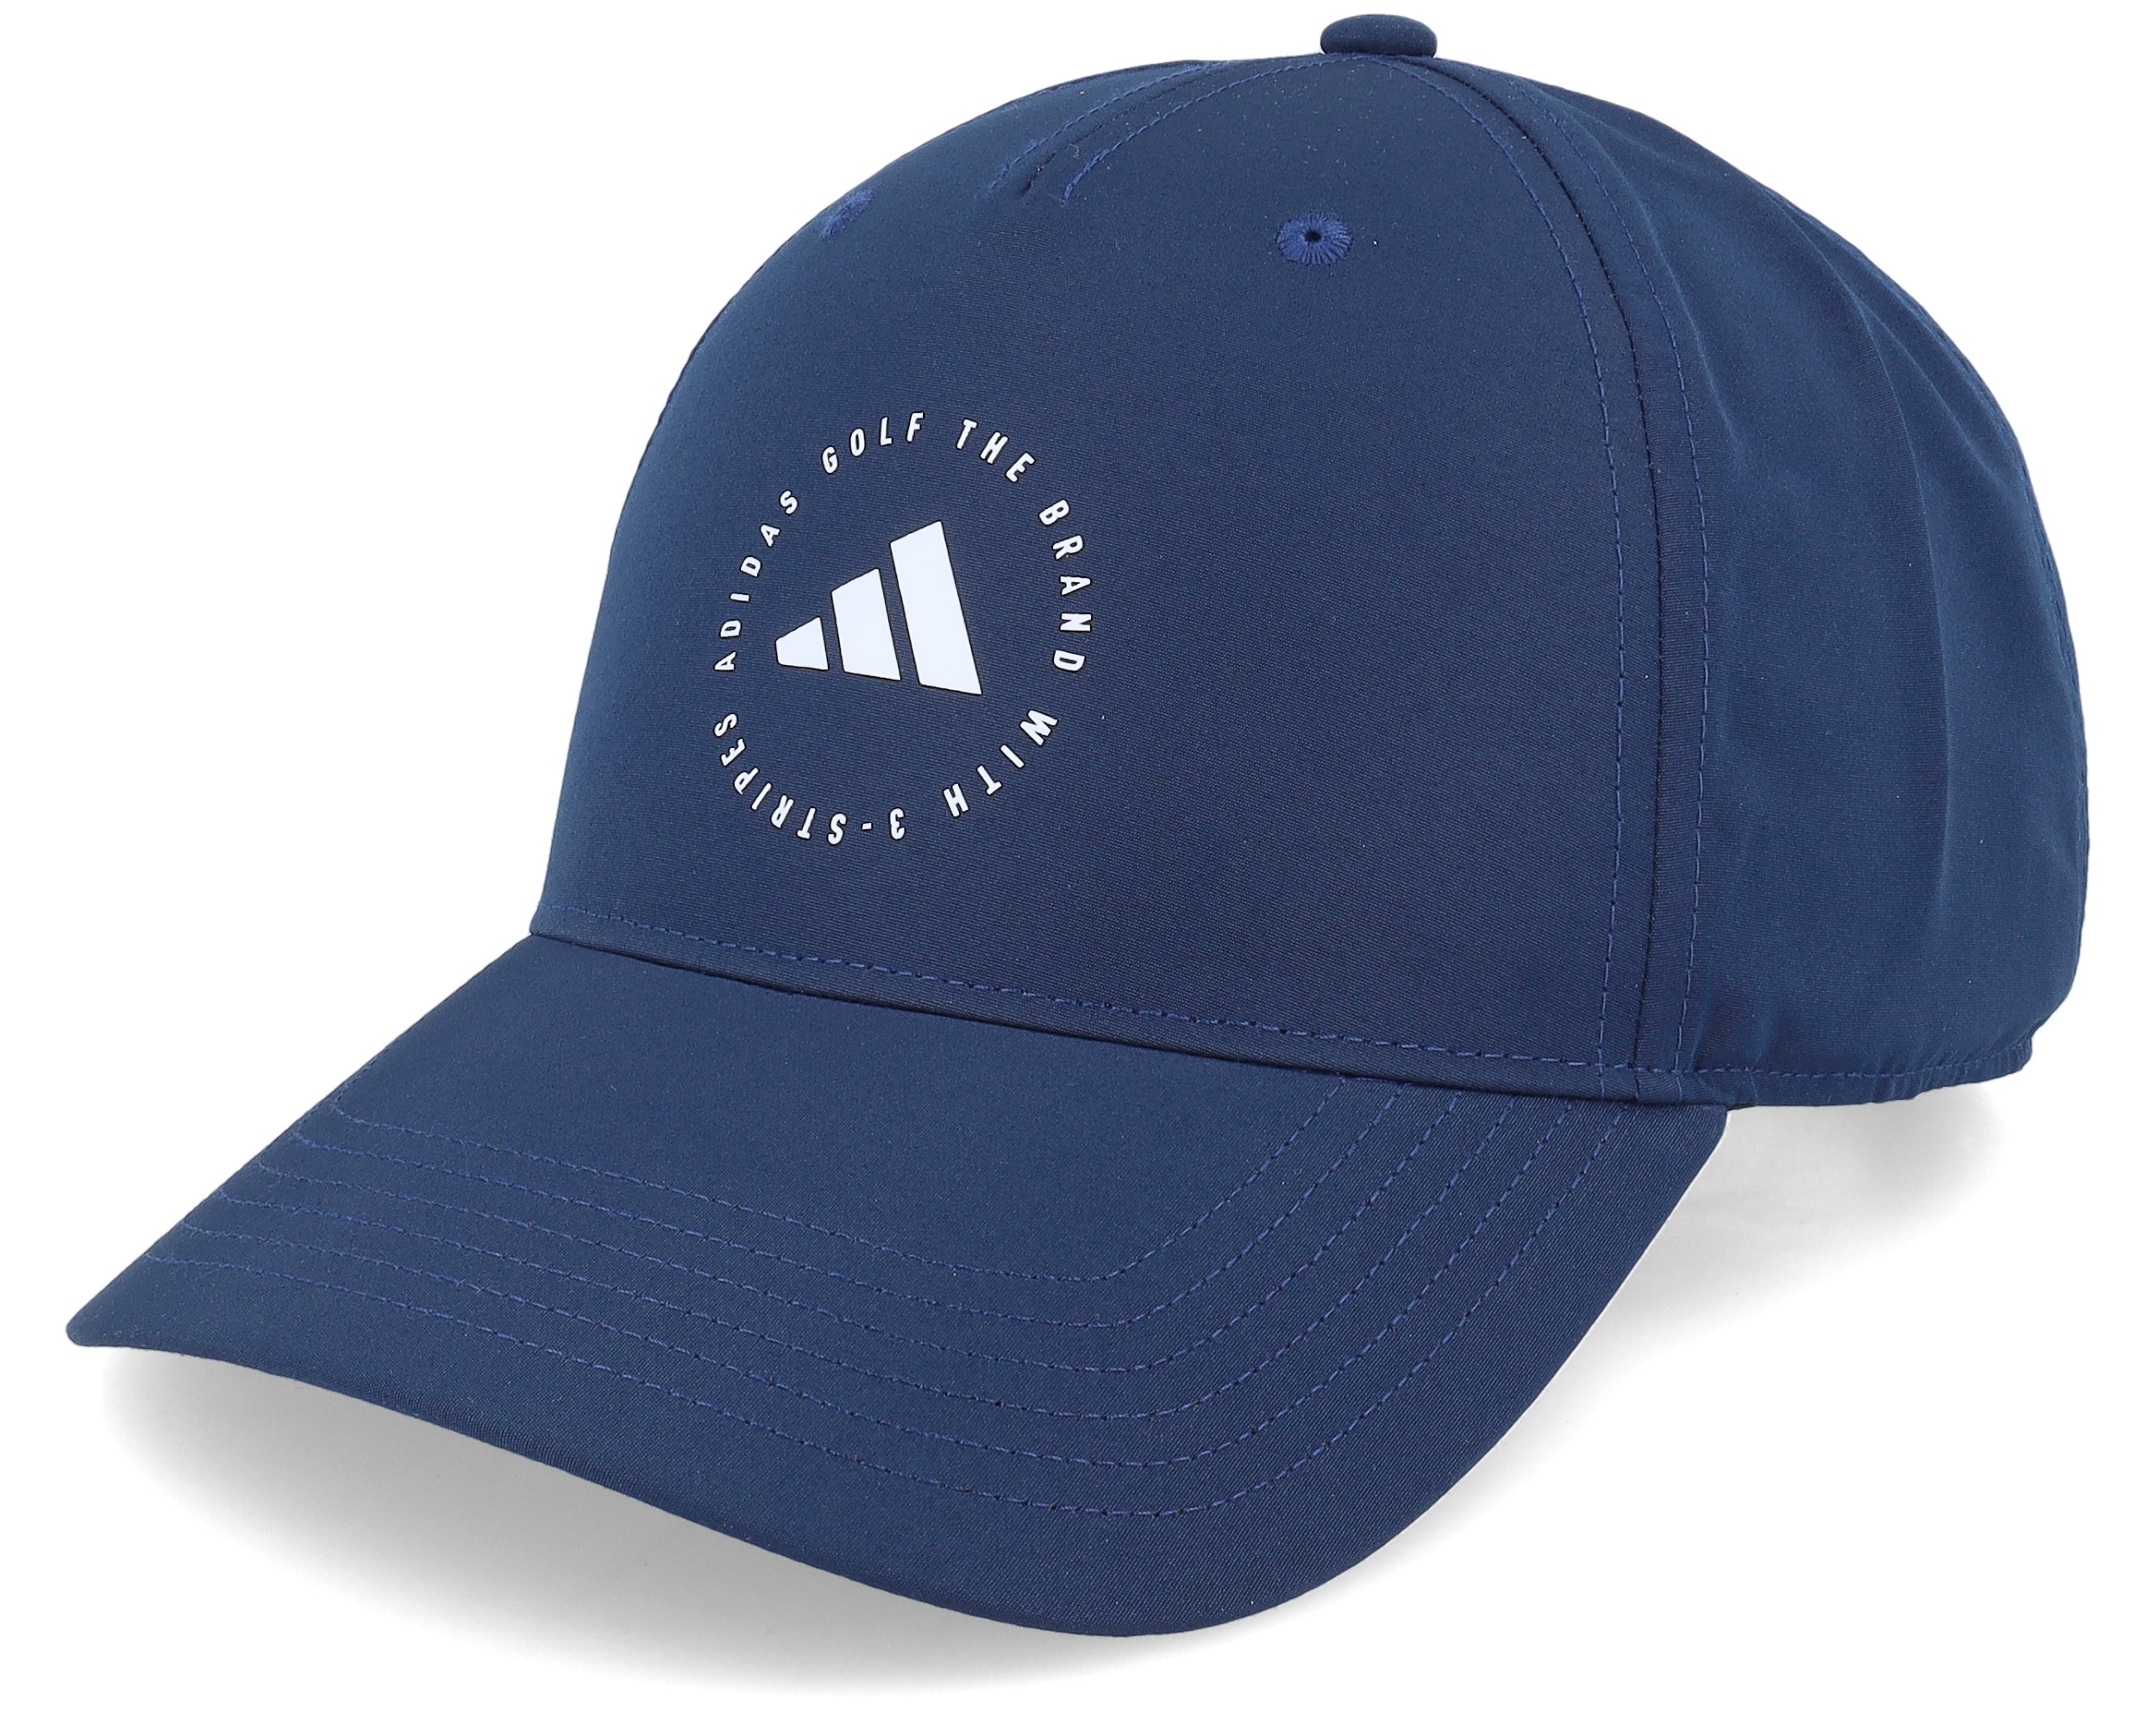 Adidas - Blue adjustable Cap - Golf Perform Team Navy Blue @ Hatstore